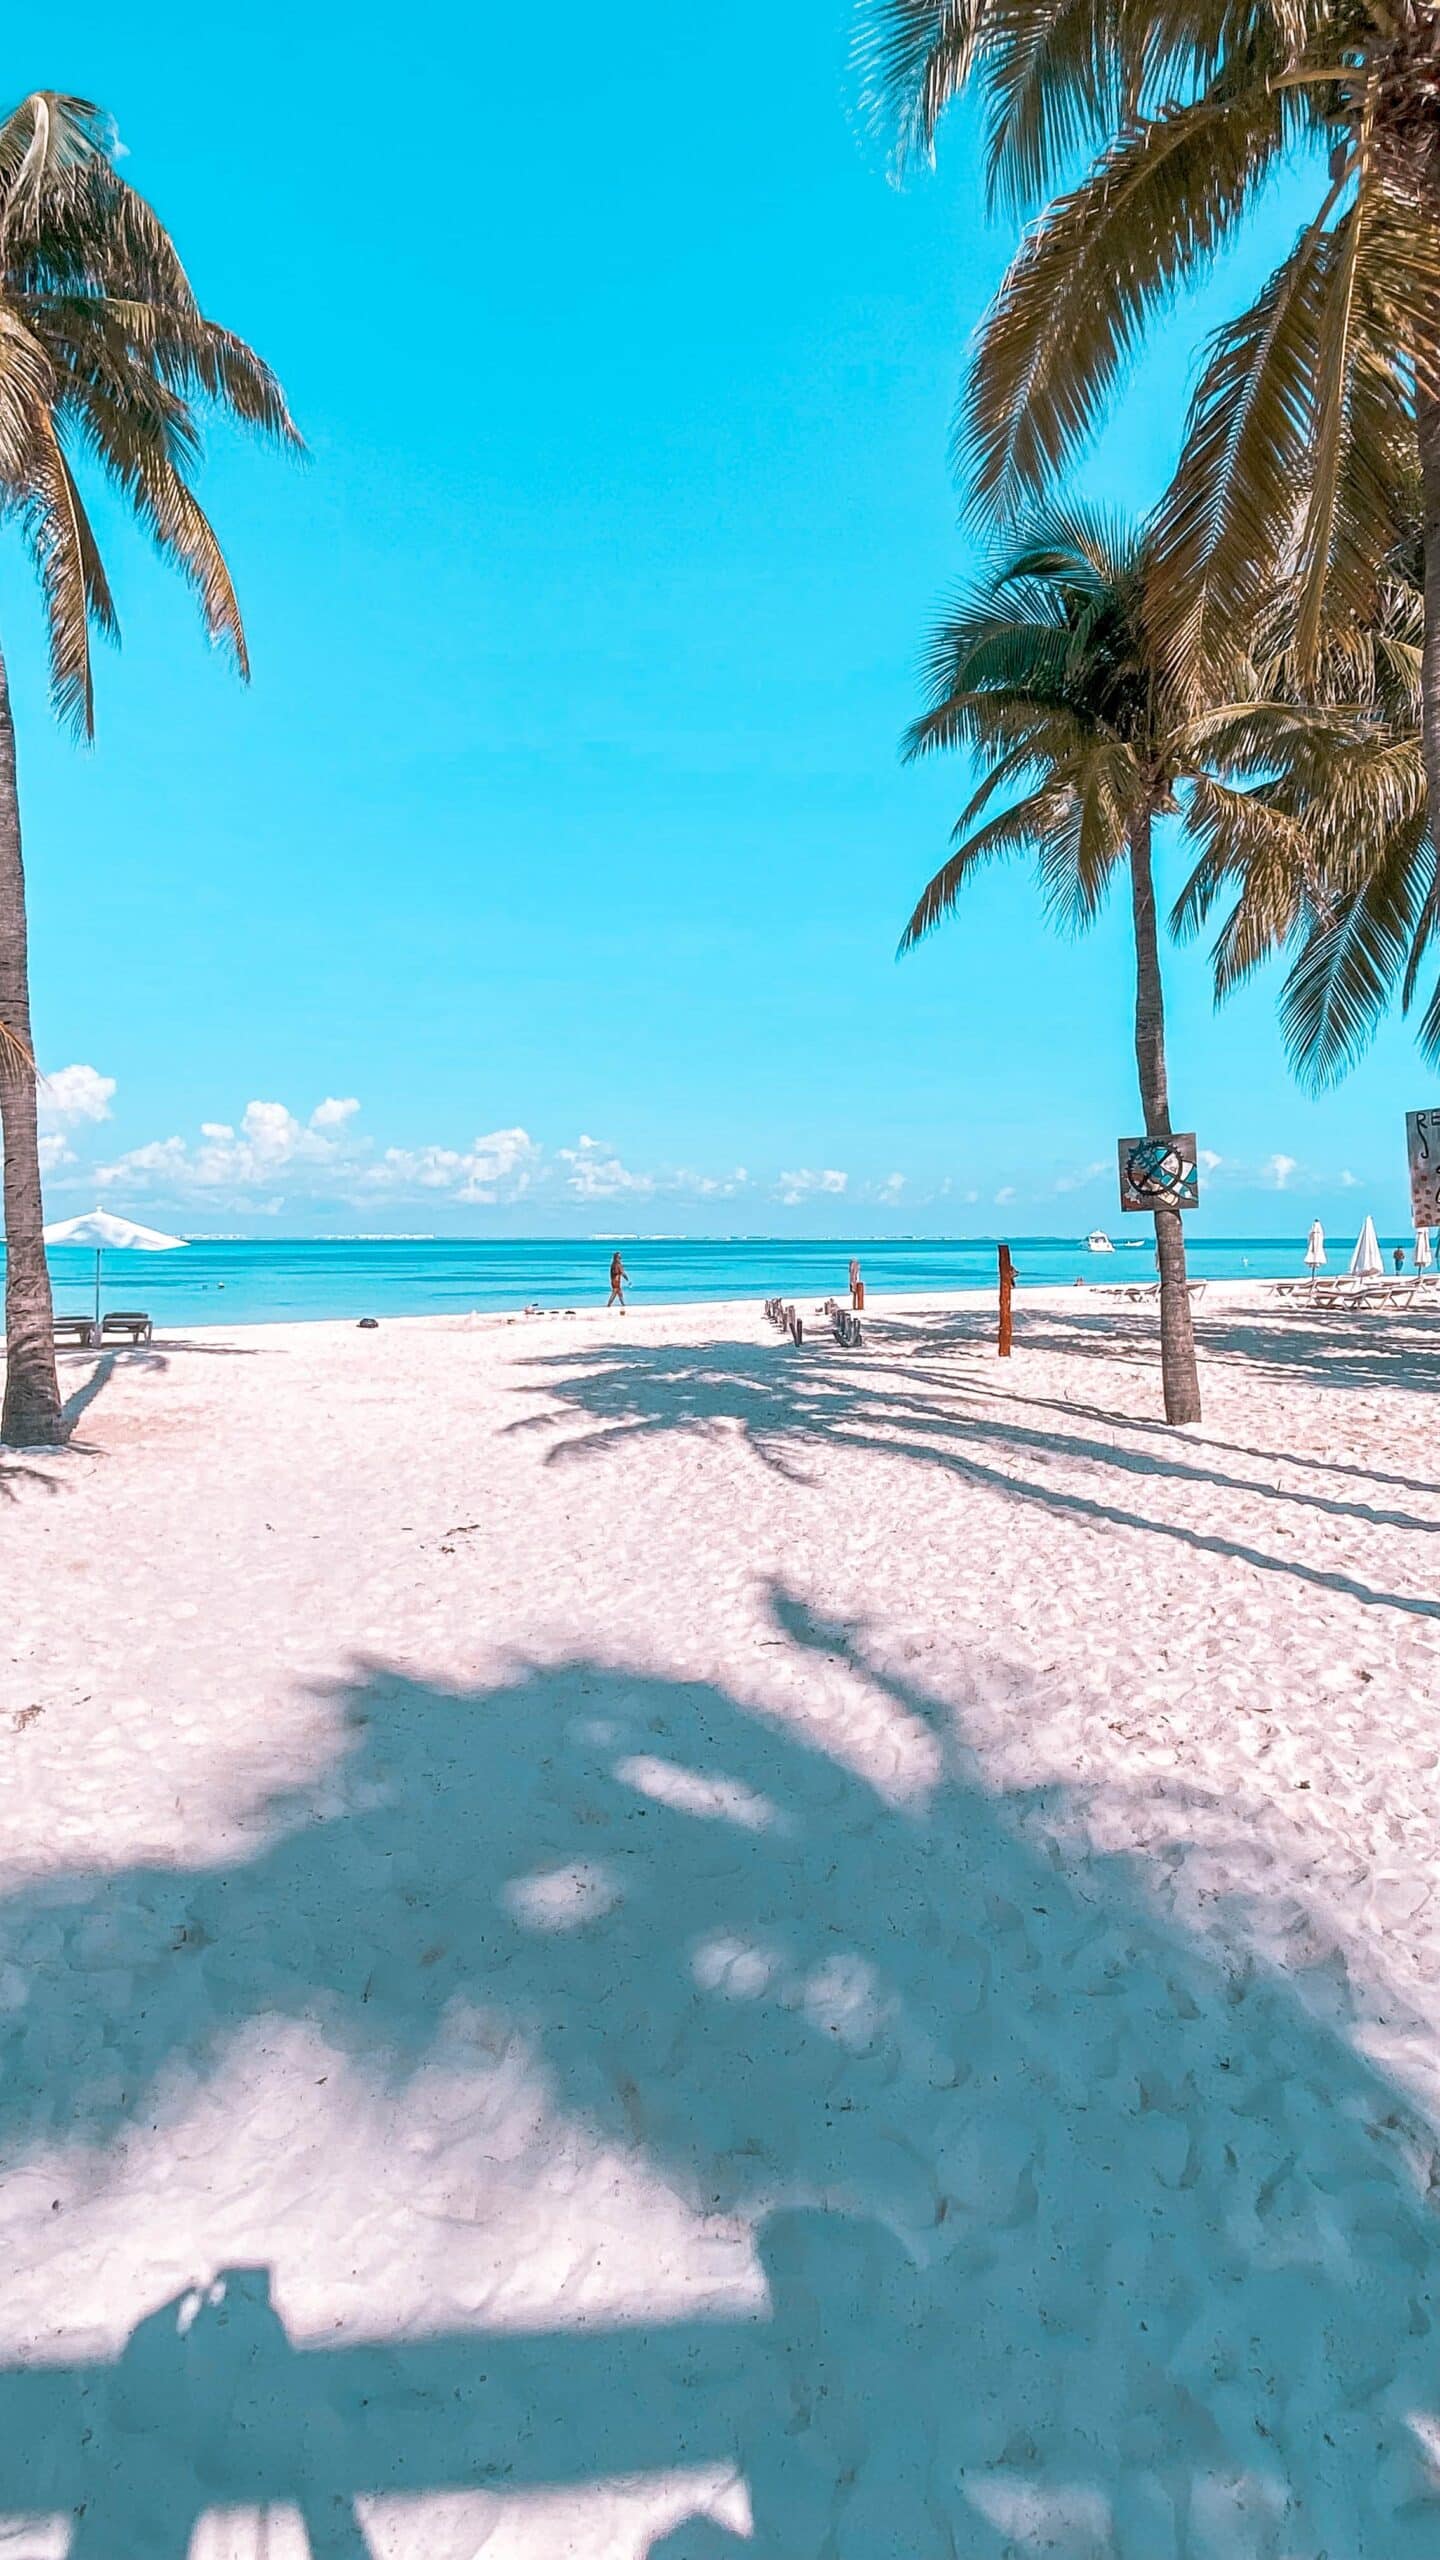 Playa Norte auf Isla Mujeres ist Karibik pur